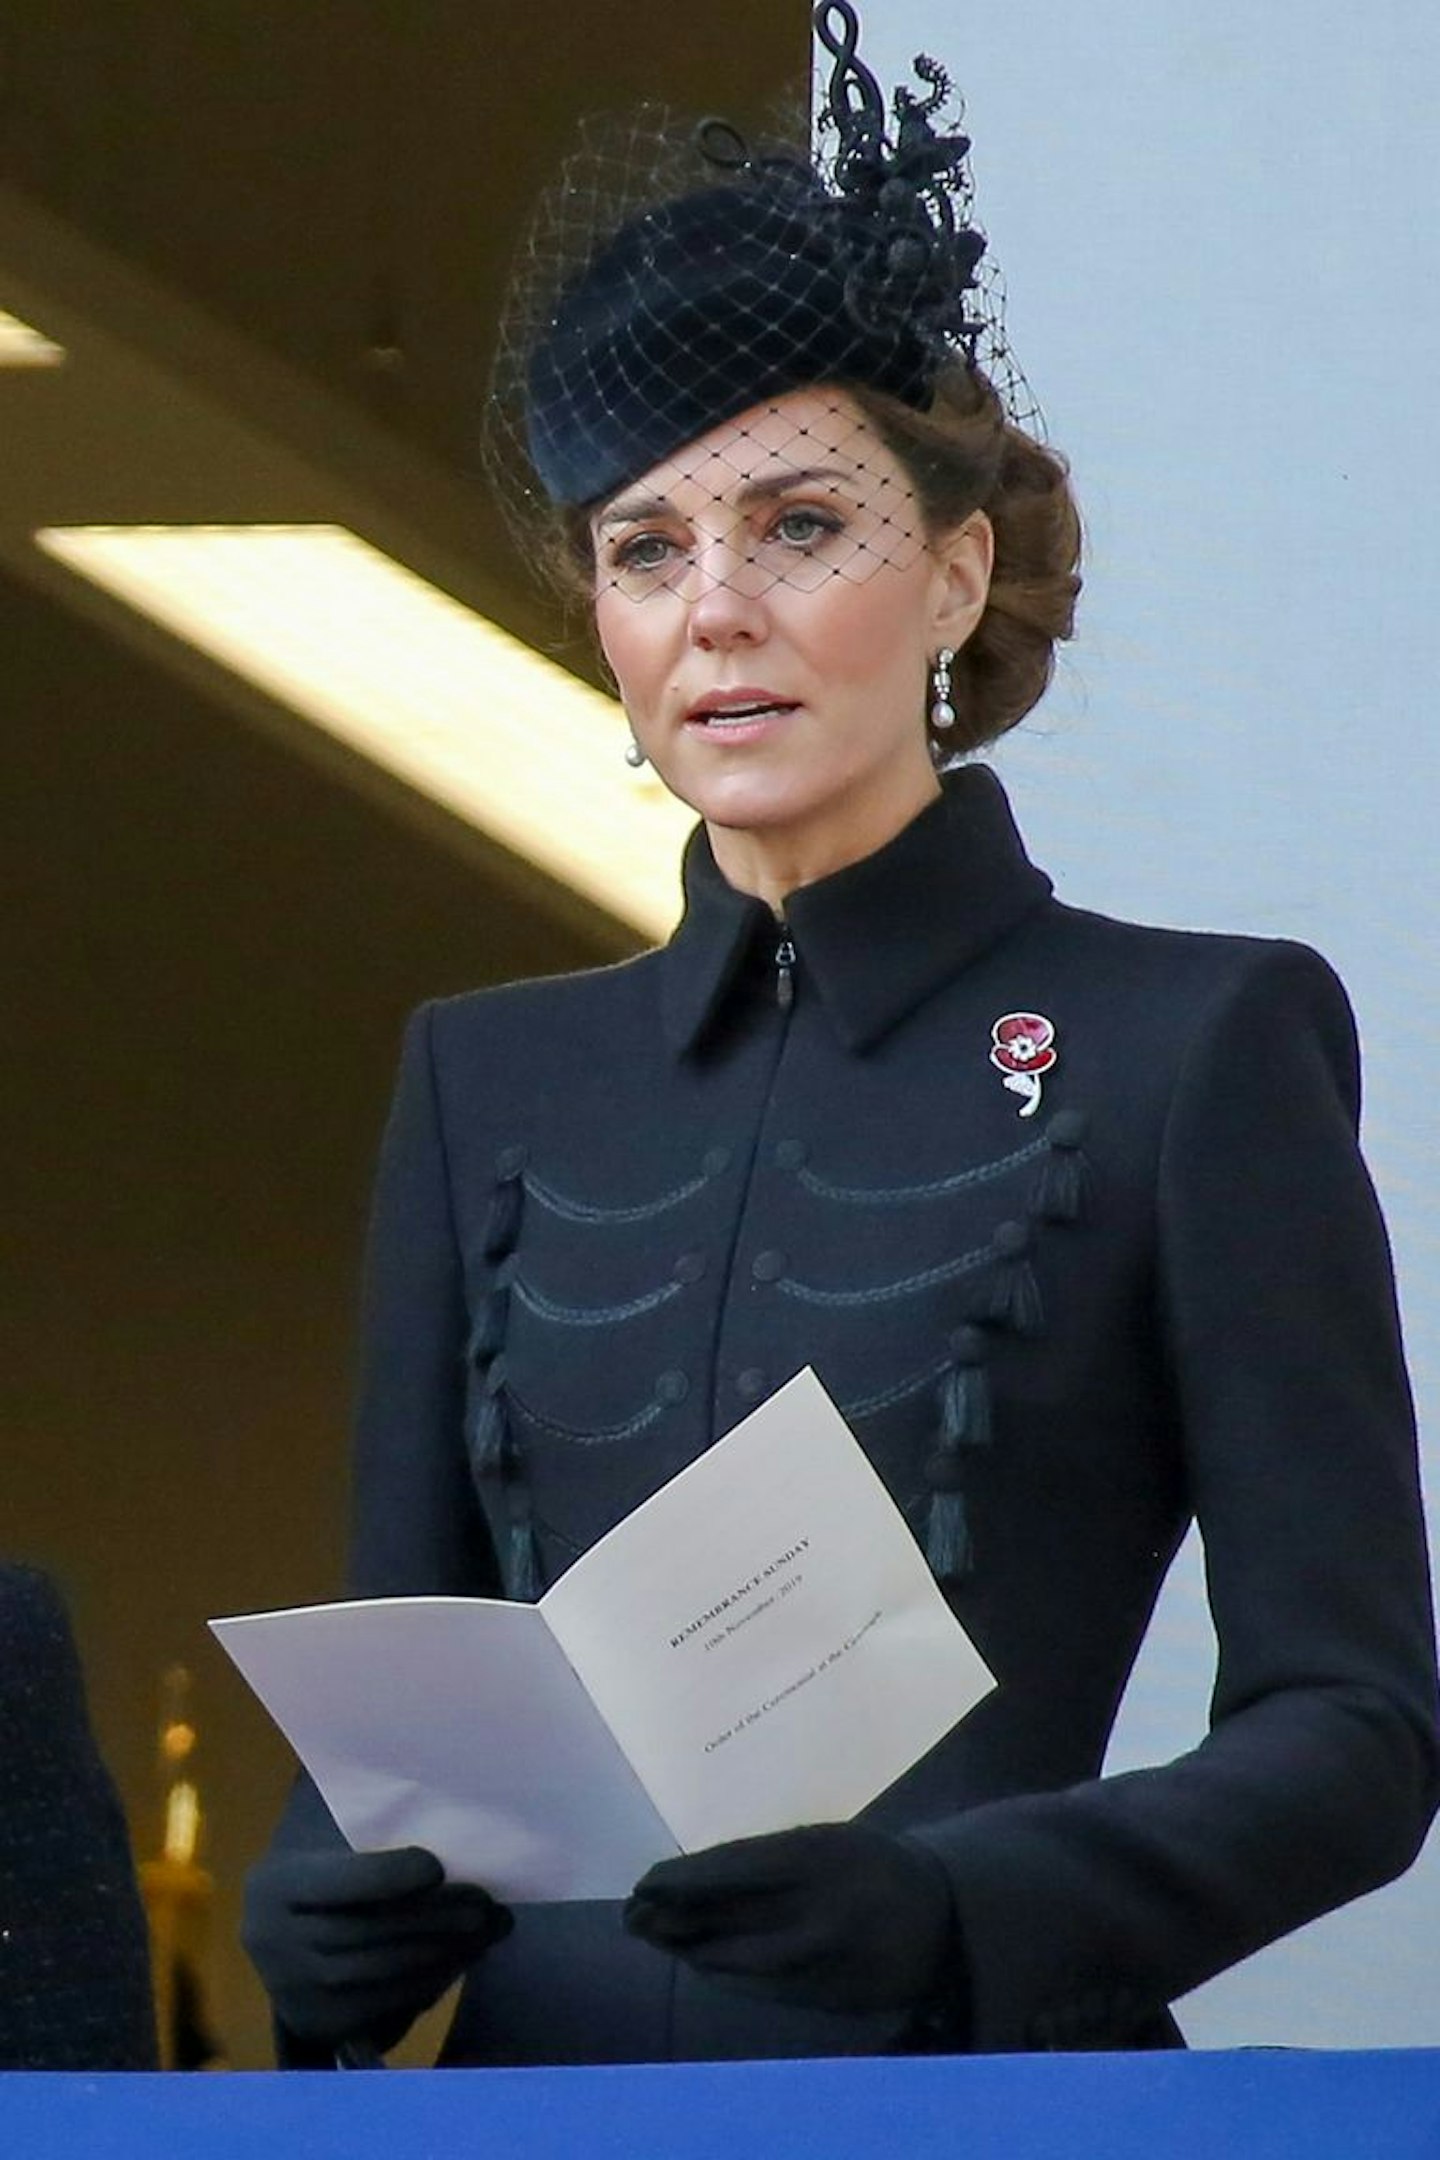 Kate Middleton wearing the Codebreakers poppy brooch